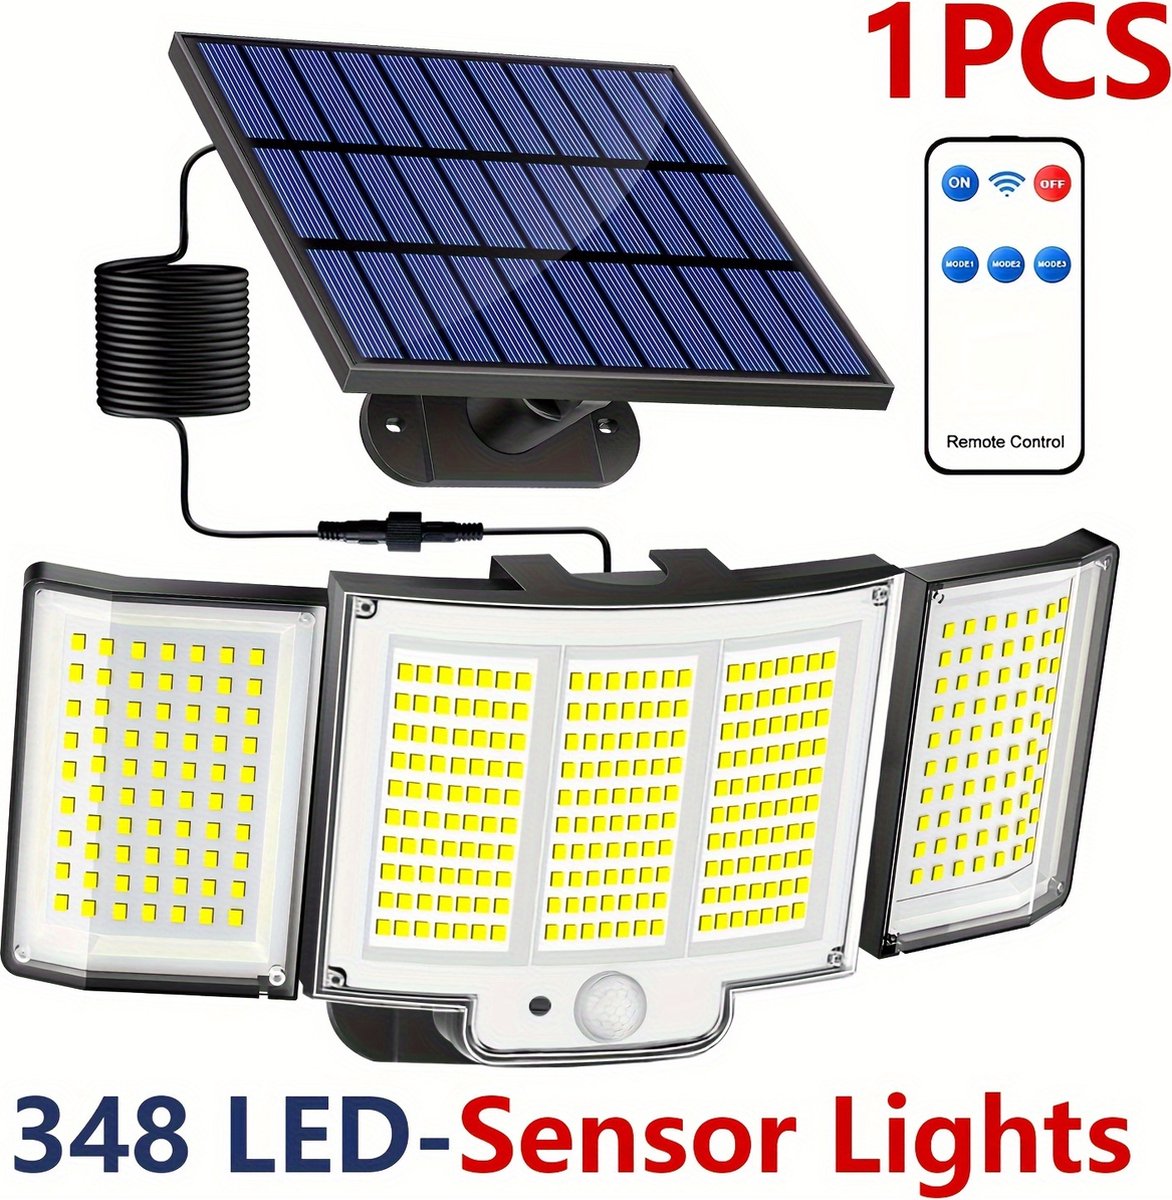 Solar Buitenlamp met Bewegingssensor - Wandlamp met Sensor - Zonne-energie - 348 LED's - IP65